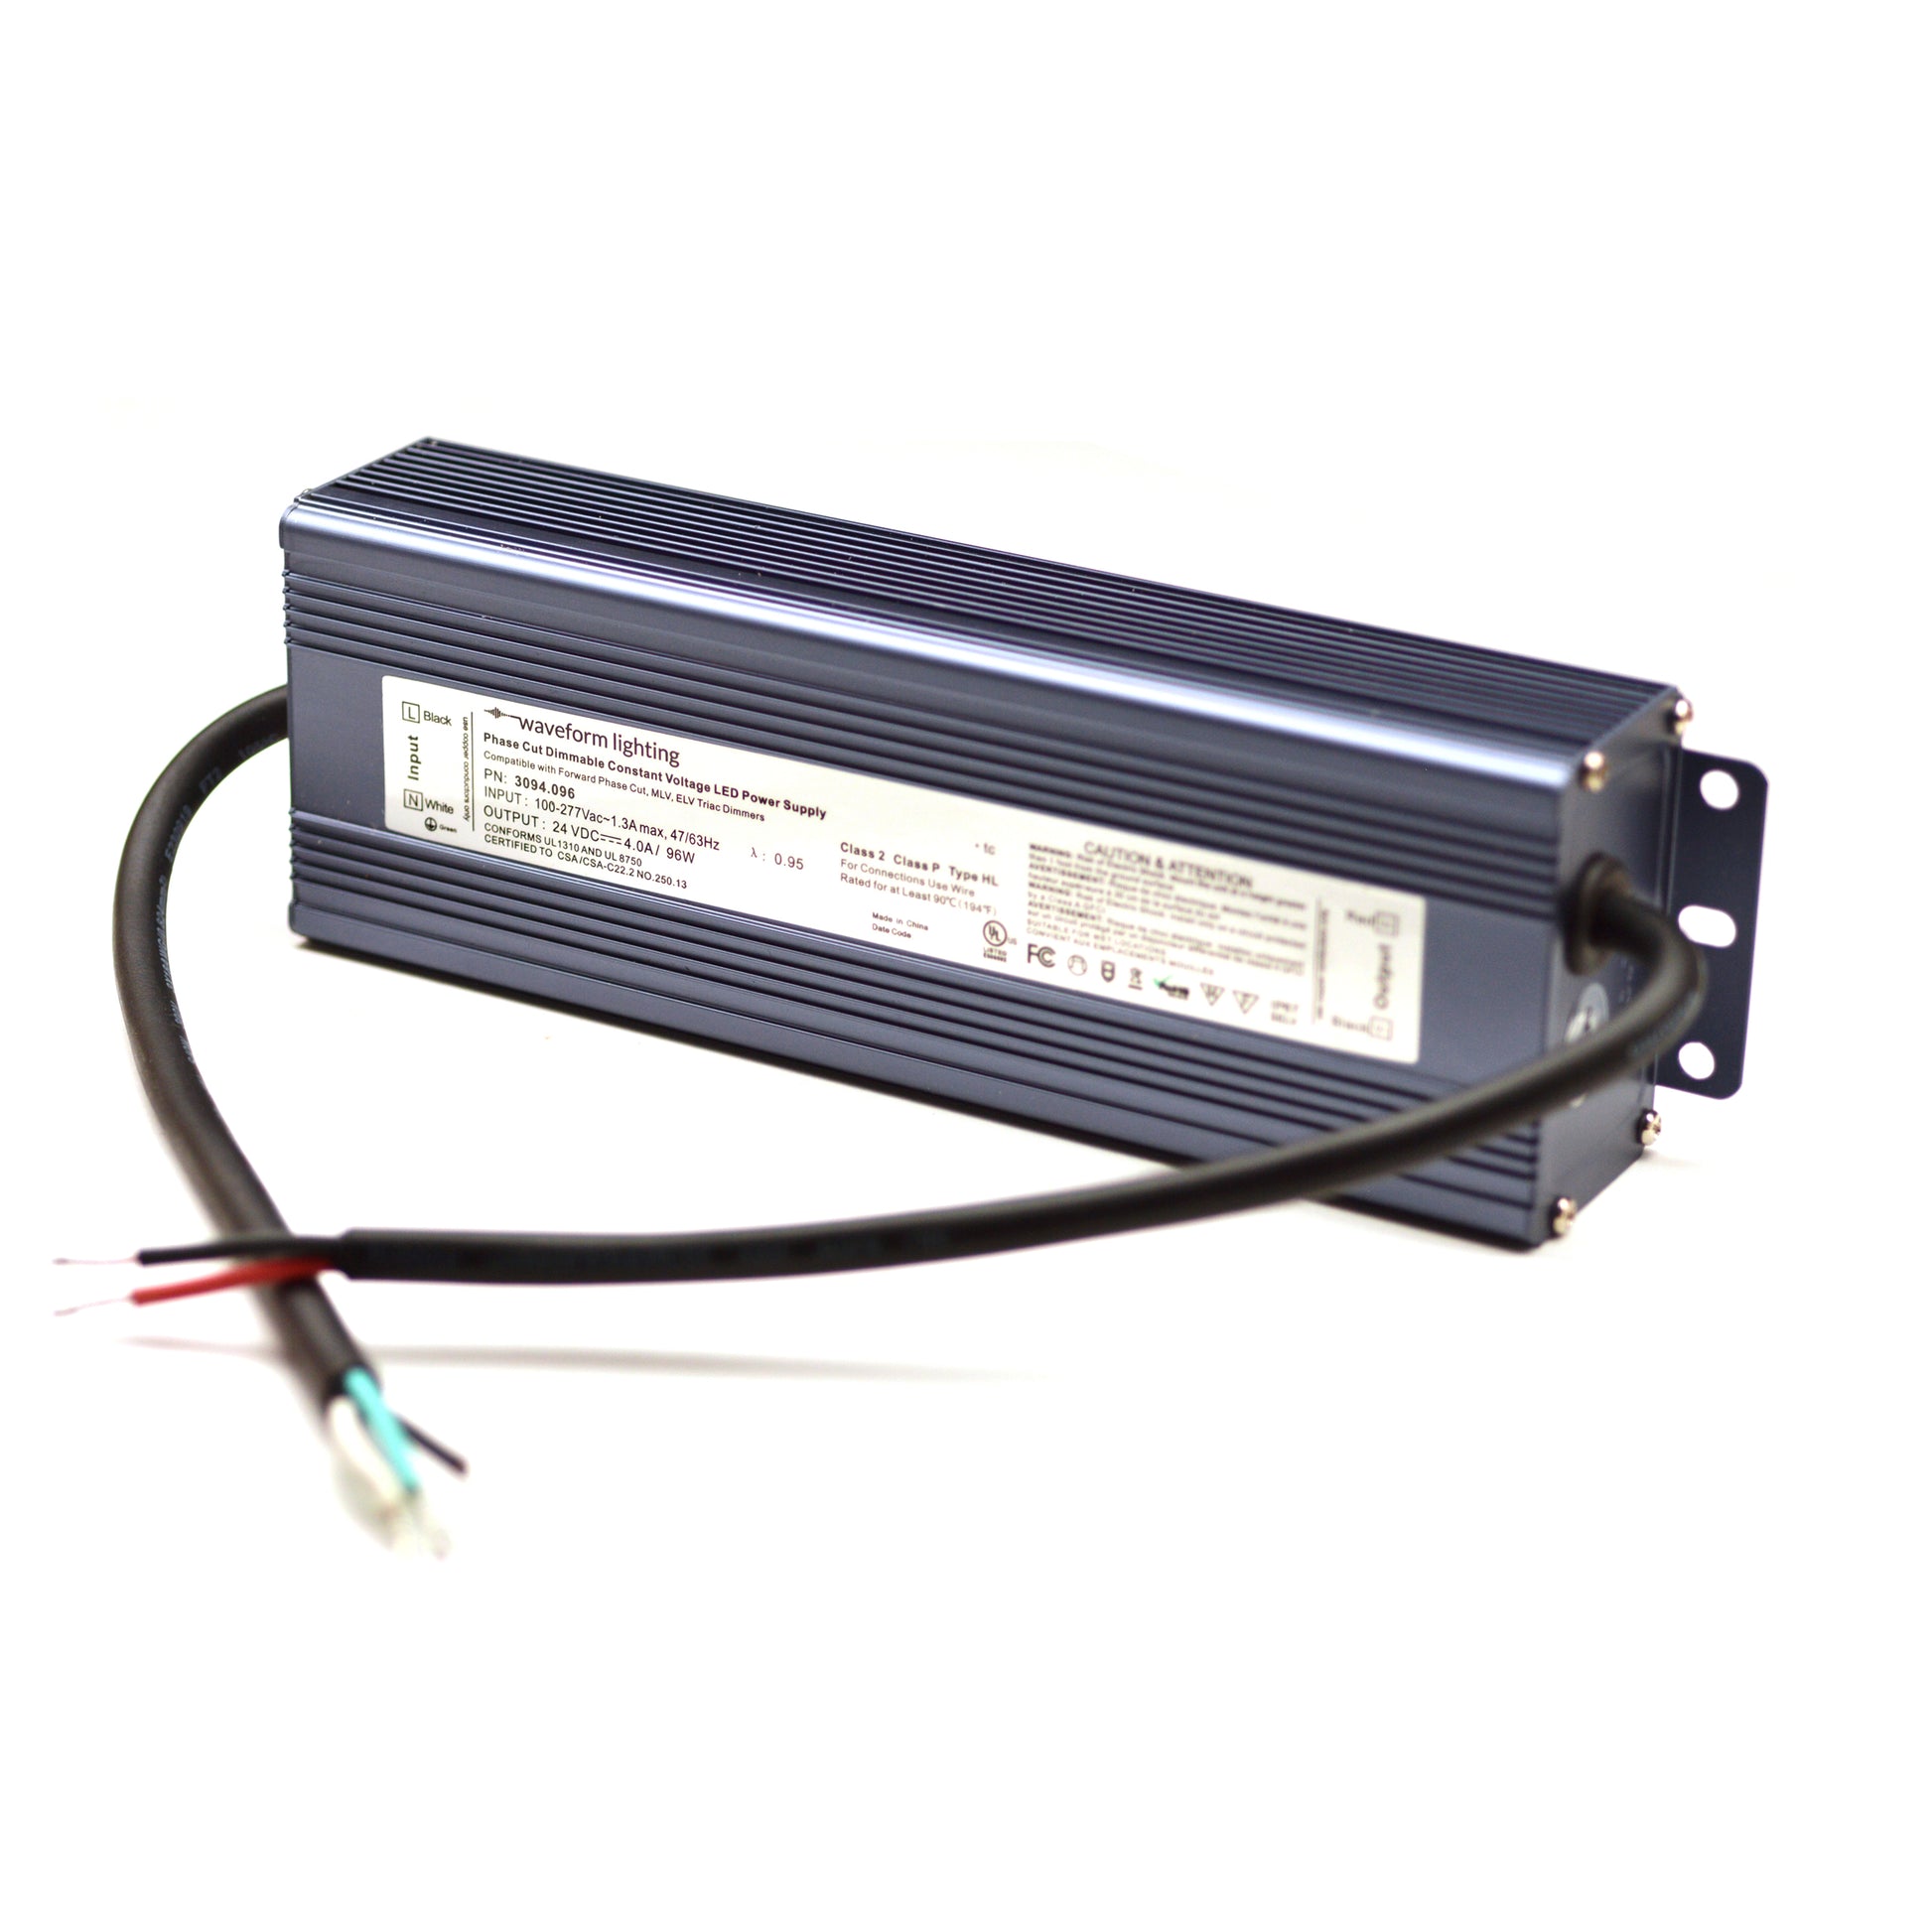 DC Hardwire LED Driver, 30 watts, 12V